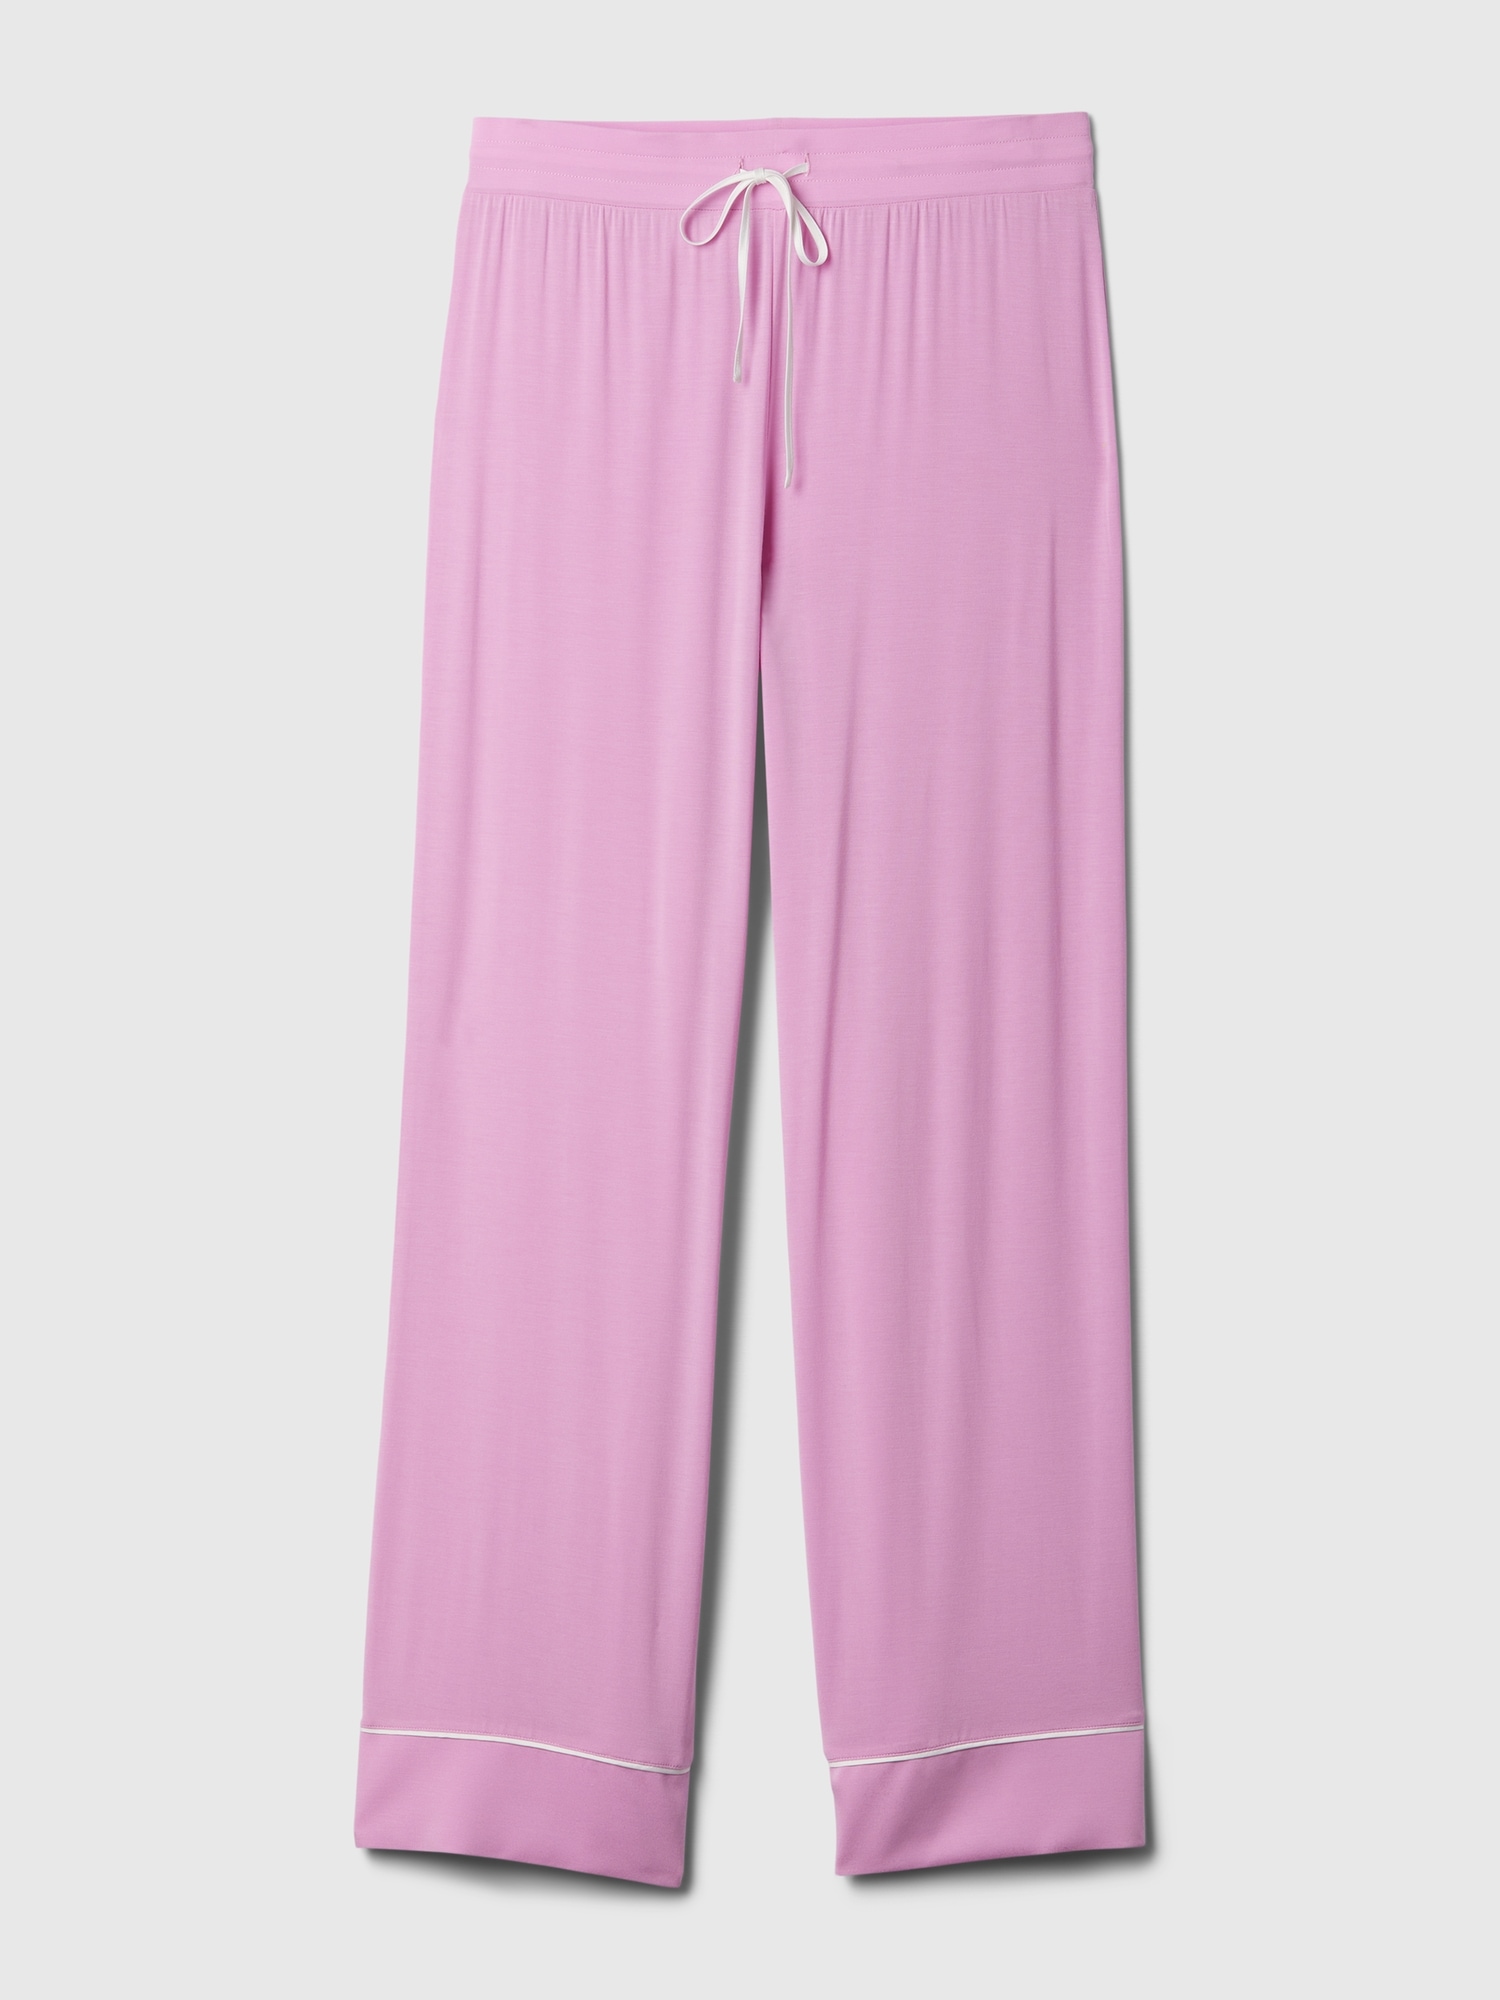  Women's Pajama Pants Bright Lilac Women Pjs Bottoms